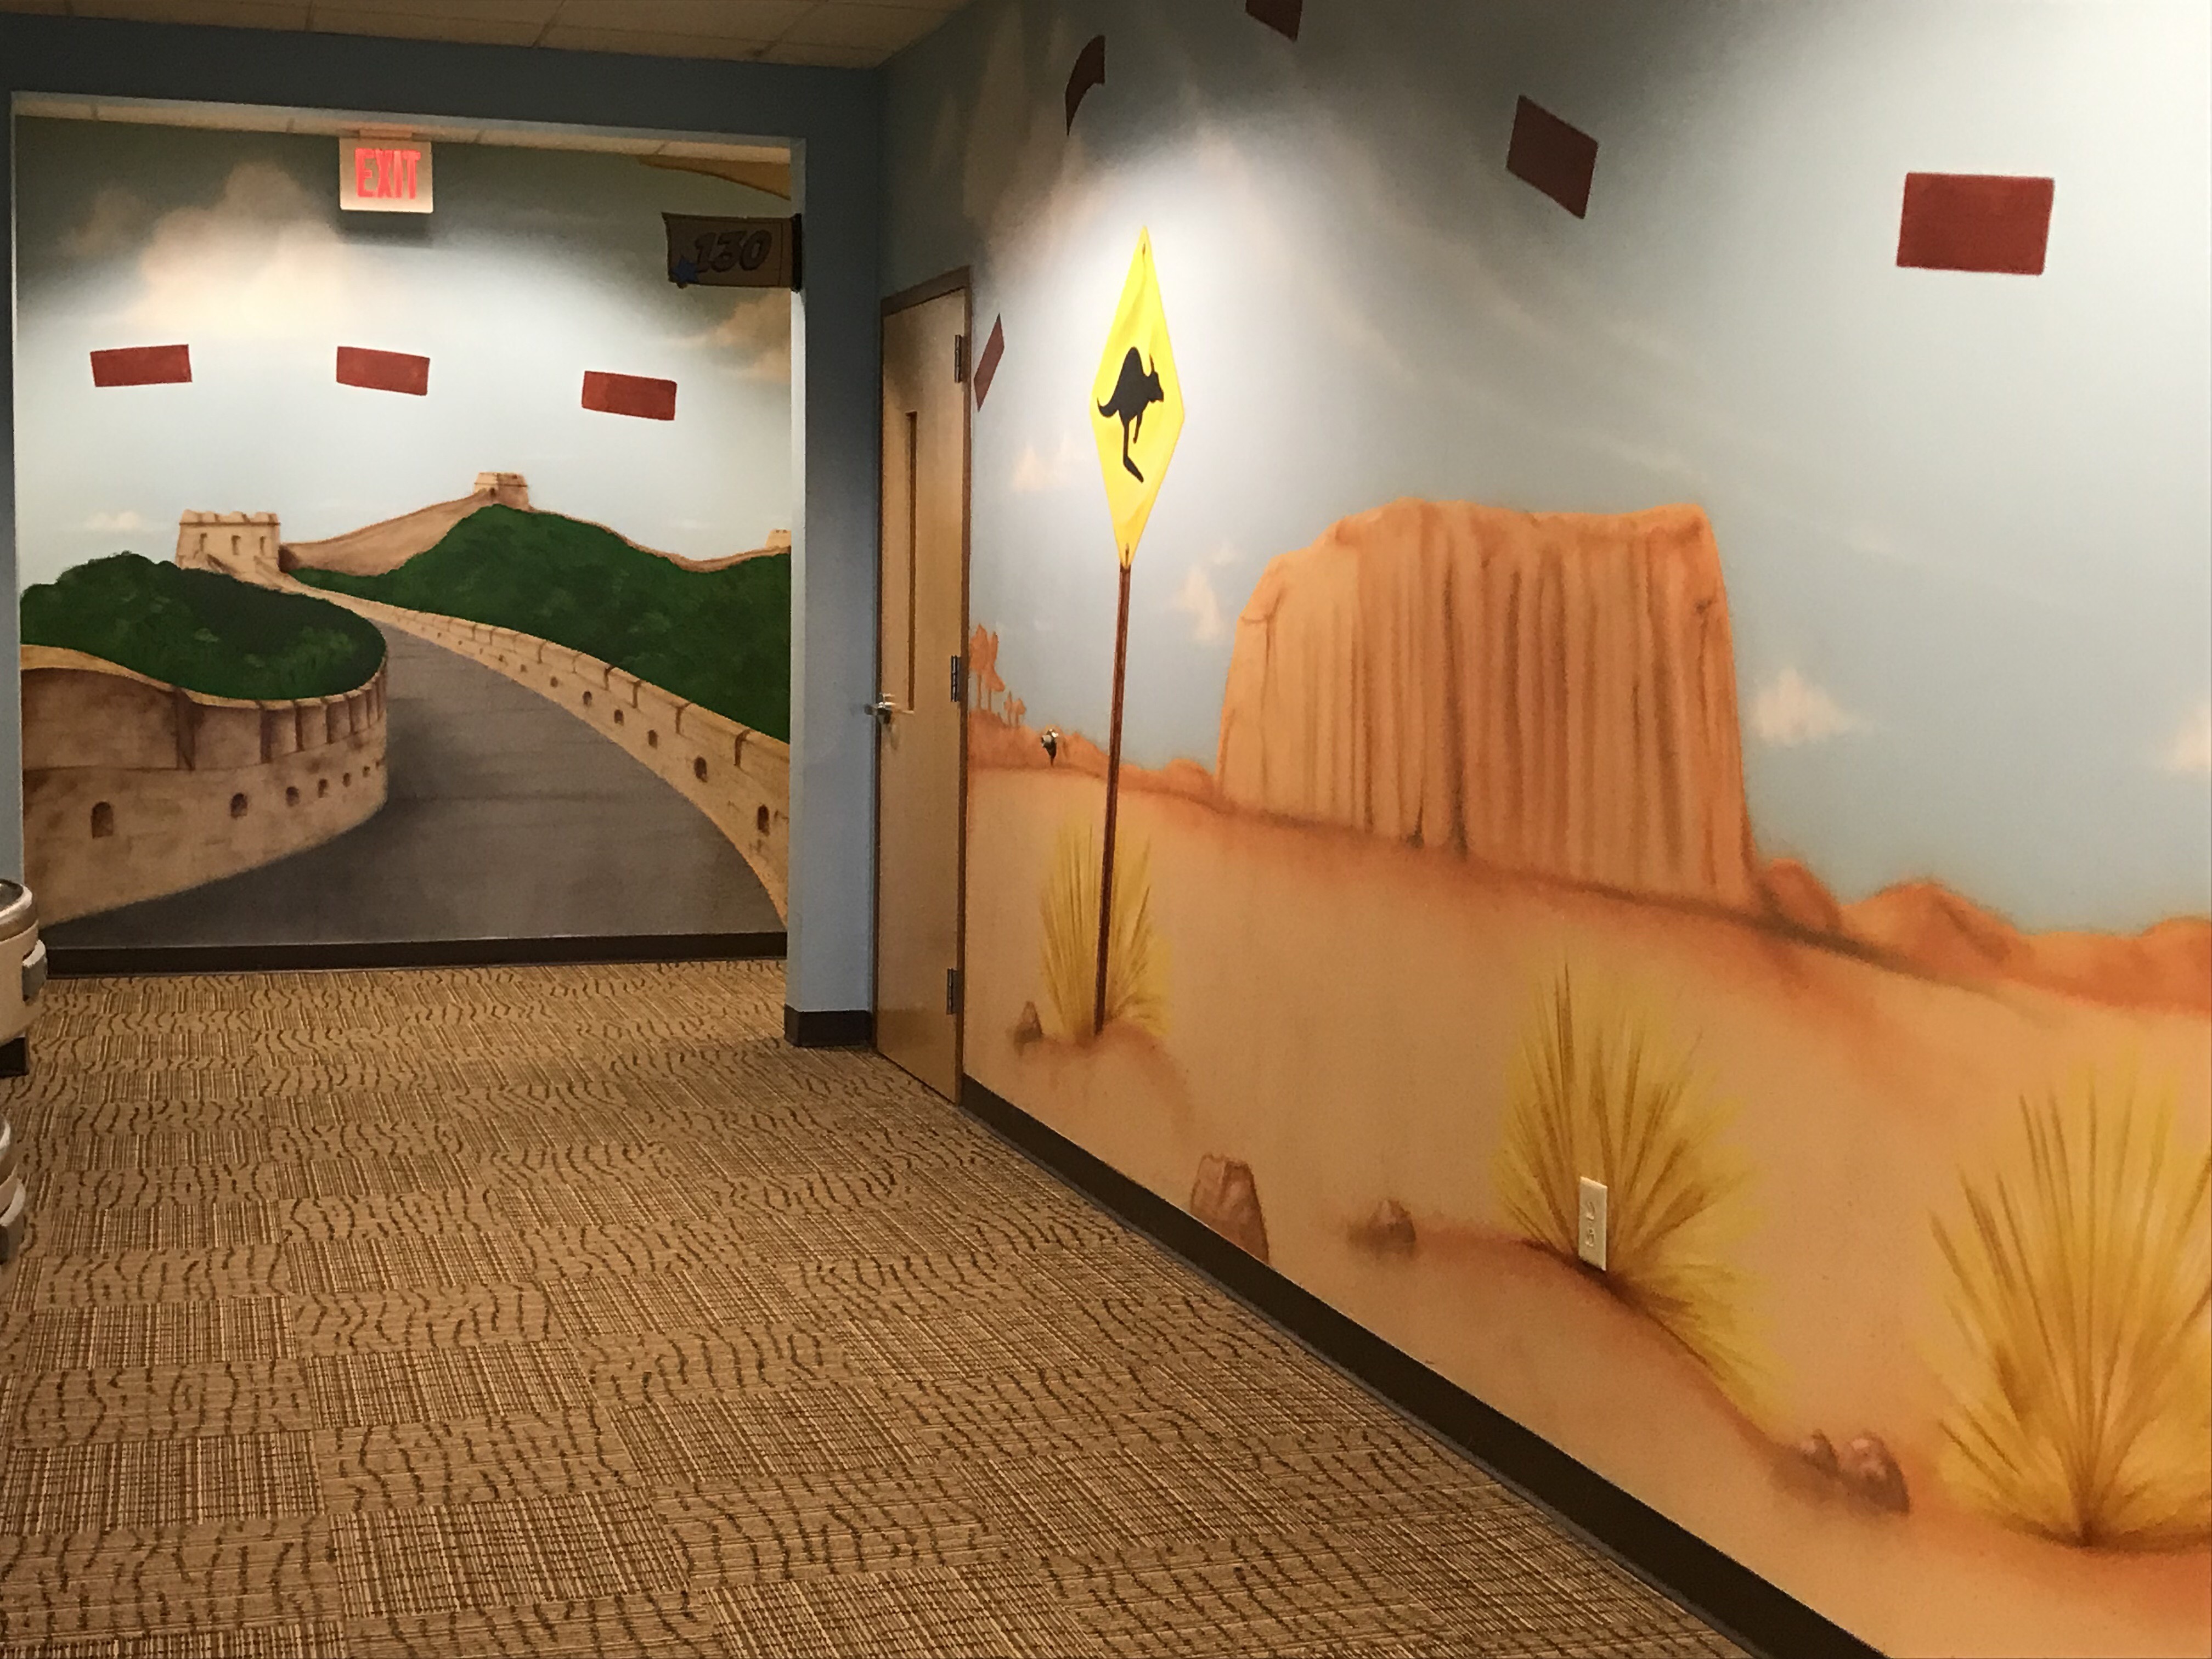 children's ministry room designs continent hallway